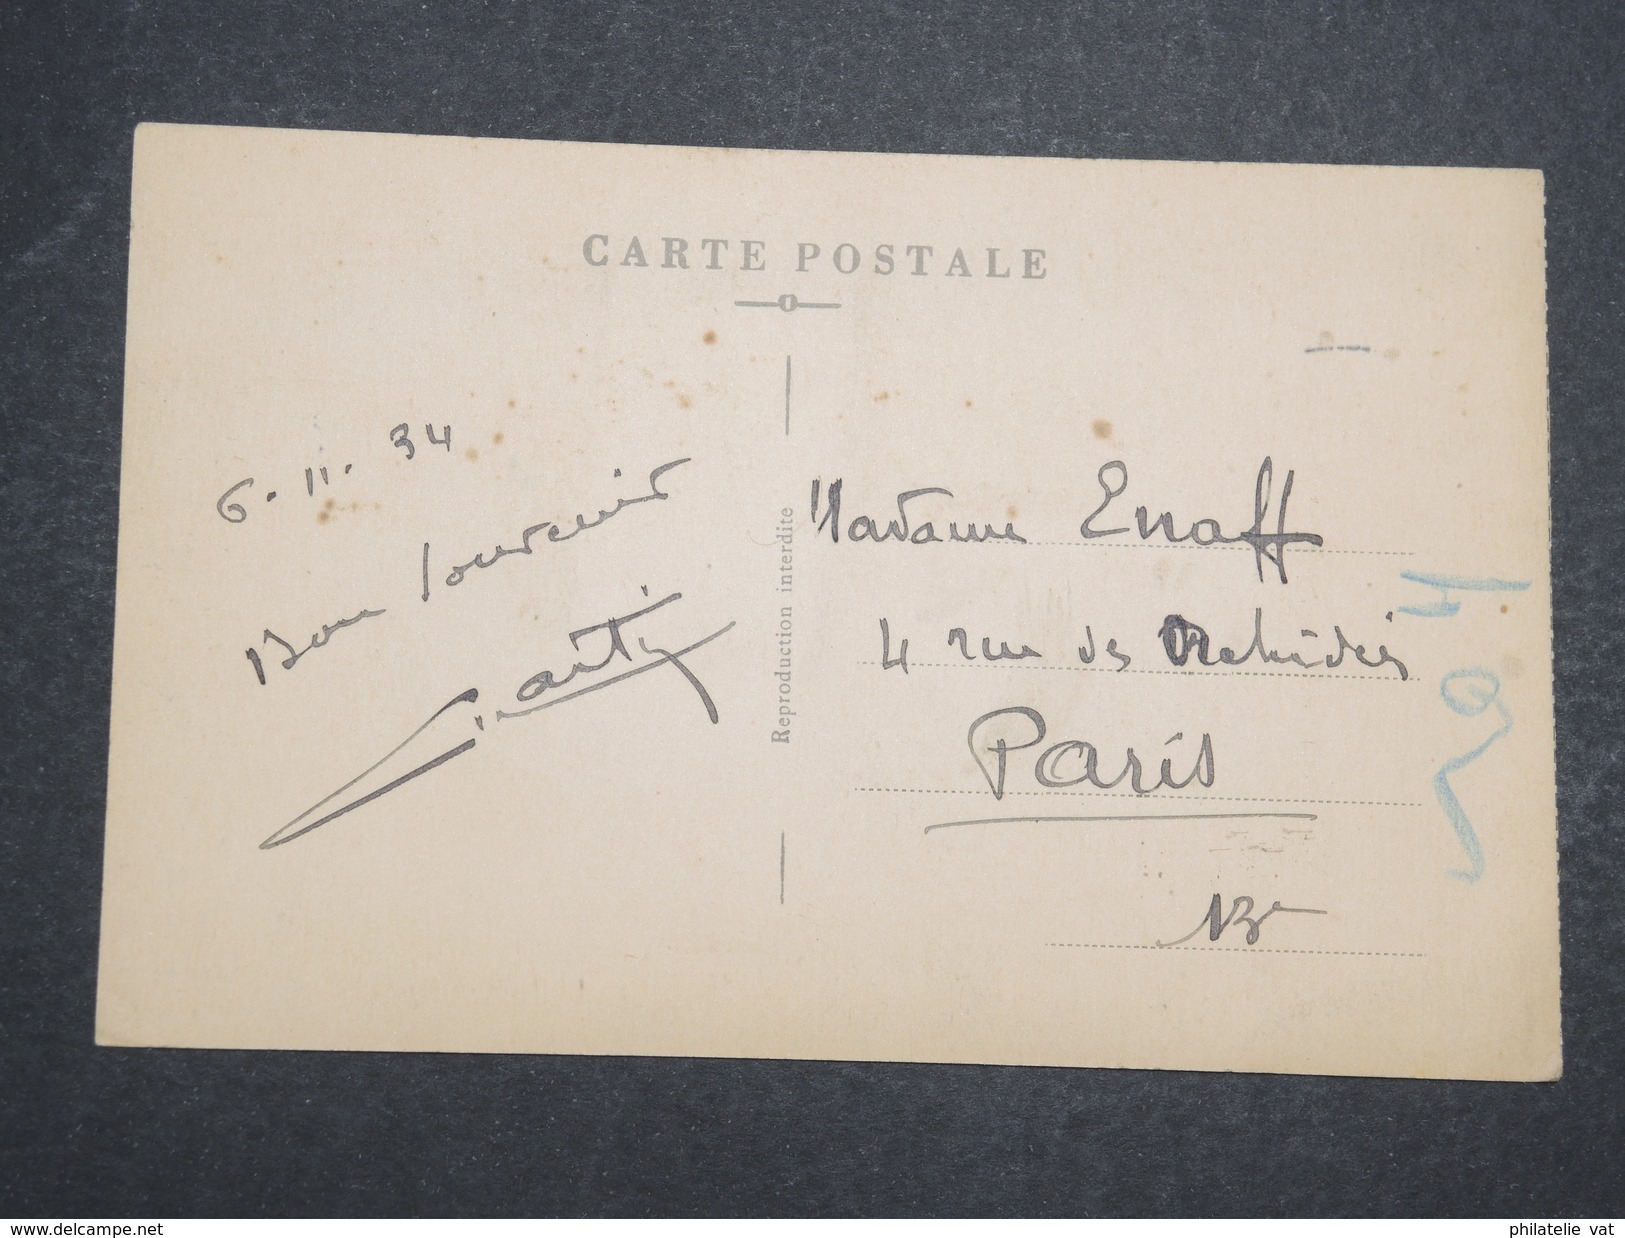 COTE FRANçAISE DES SOMALIS - Carte Postale Djibouti Pour Paris -Nov 1934 - P22098 - Cartas & Documentos